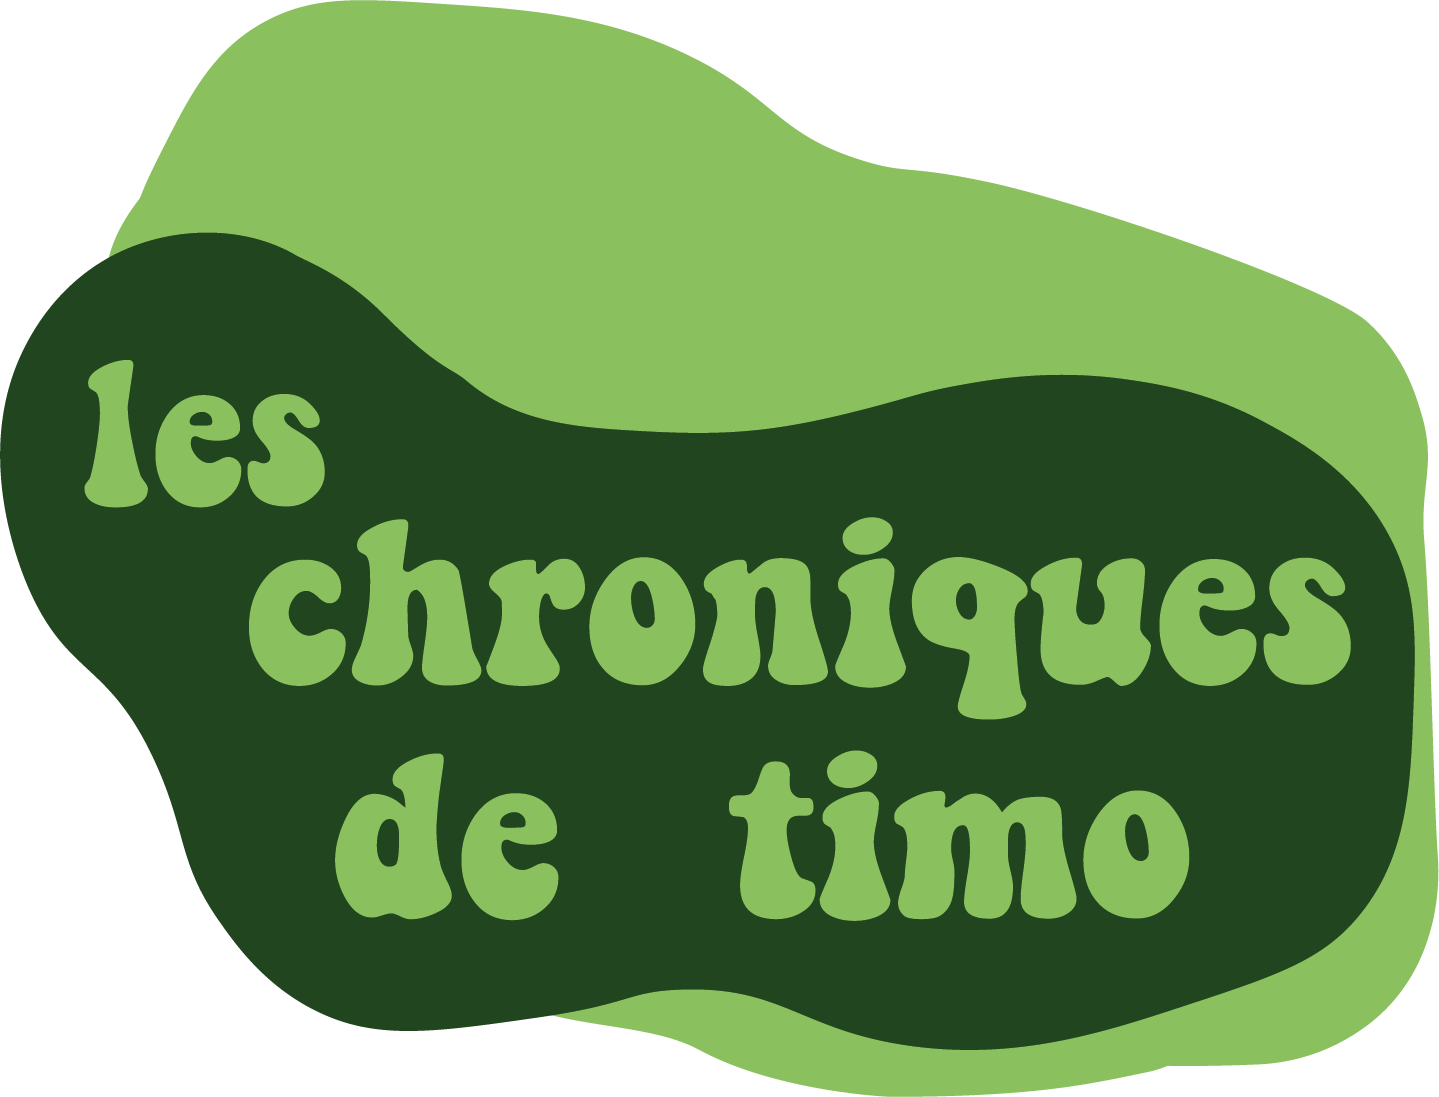 Logo for Les chroniques de Timo